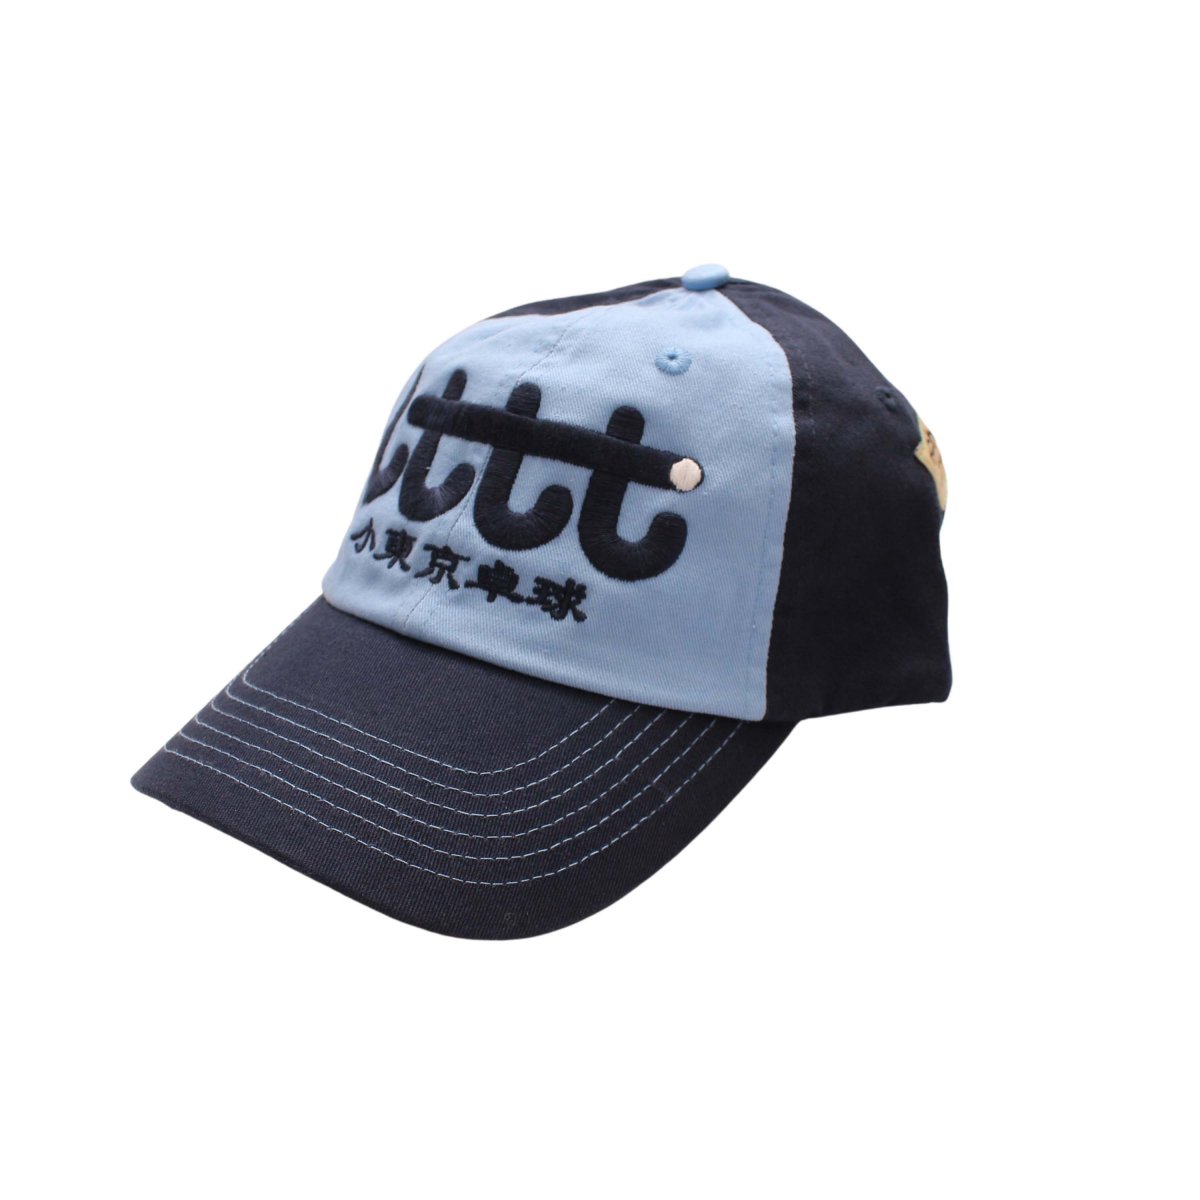 LTTT - club hat【Blue/Light Blue】